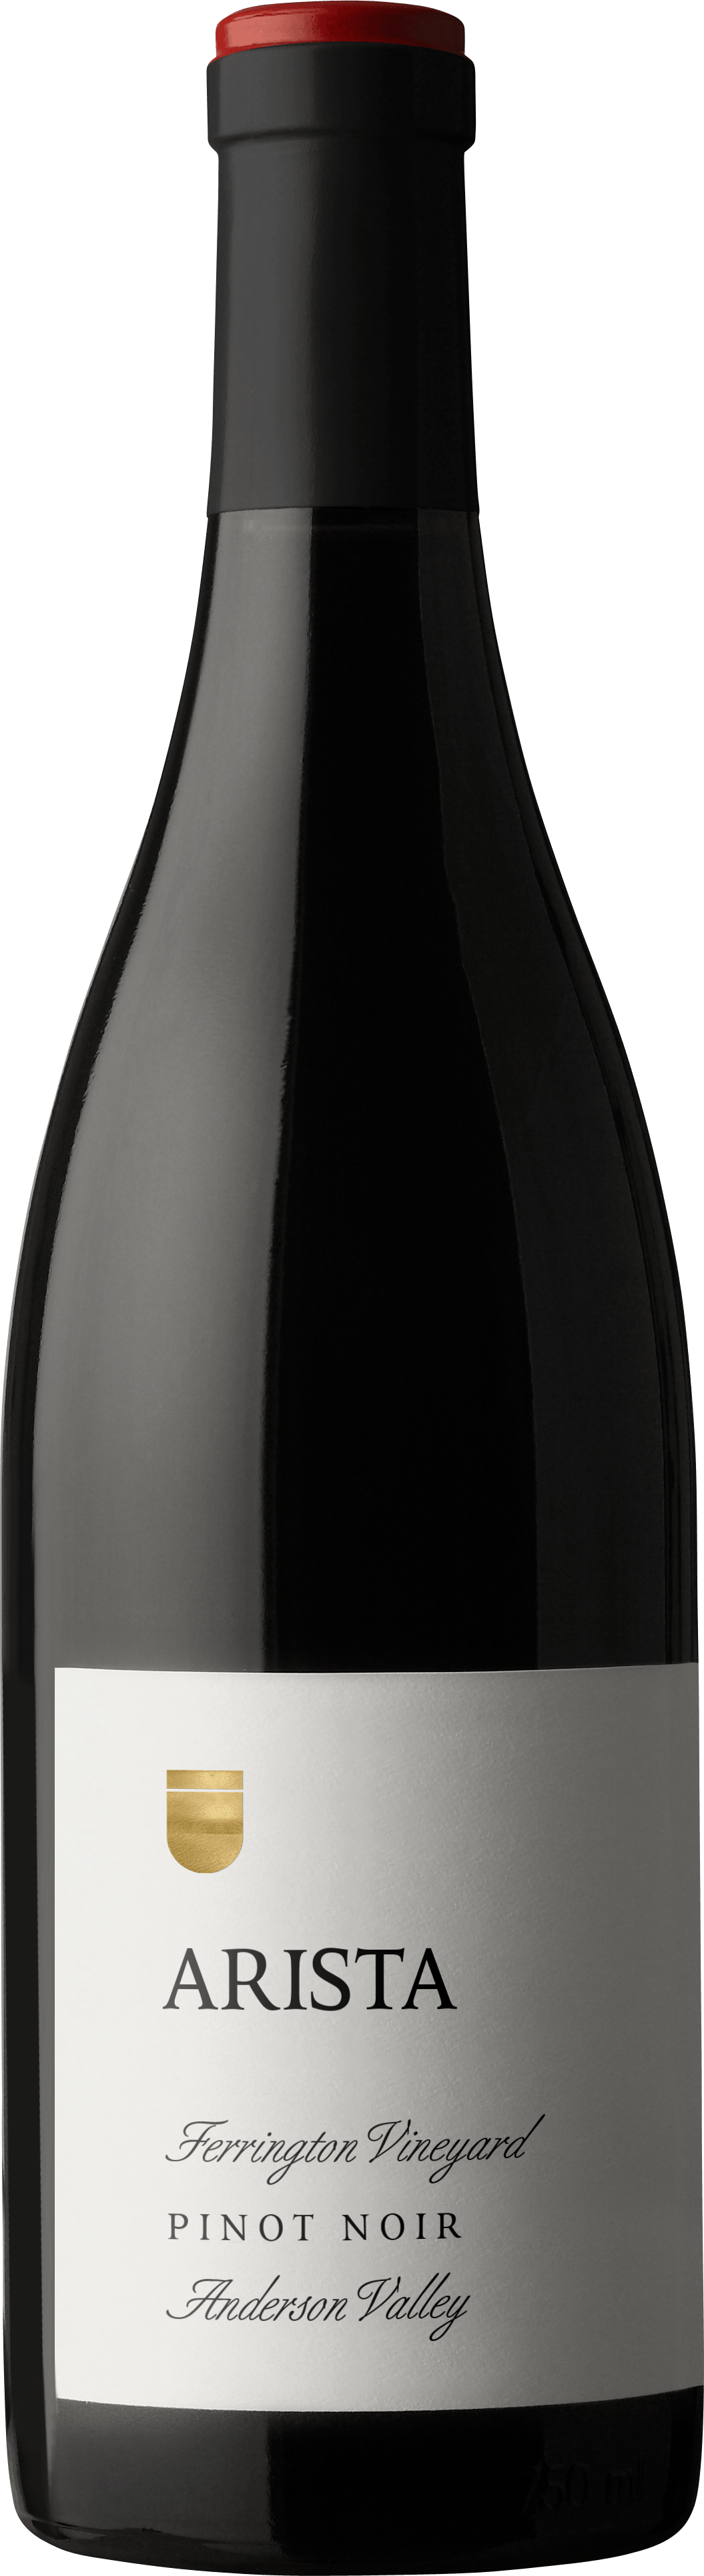 Arista 2019 Ferrington Vineyard Pinot Noir, Anderson Valley